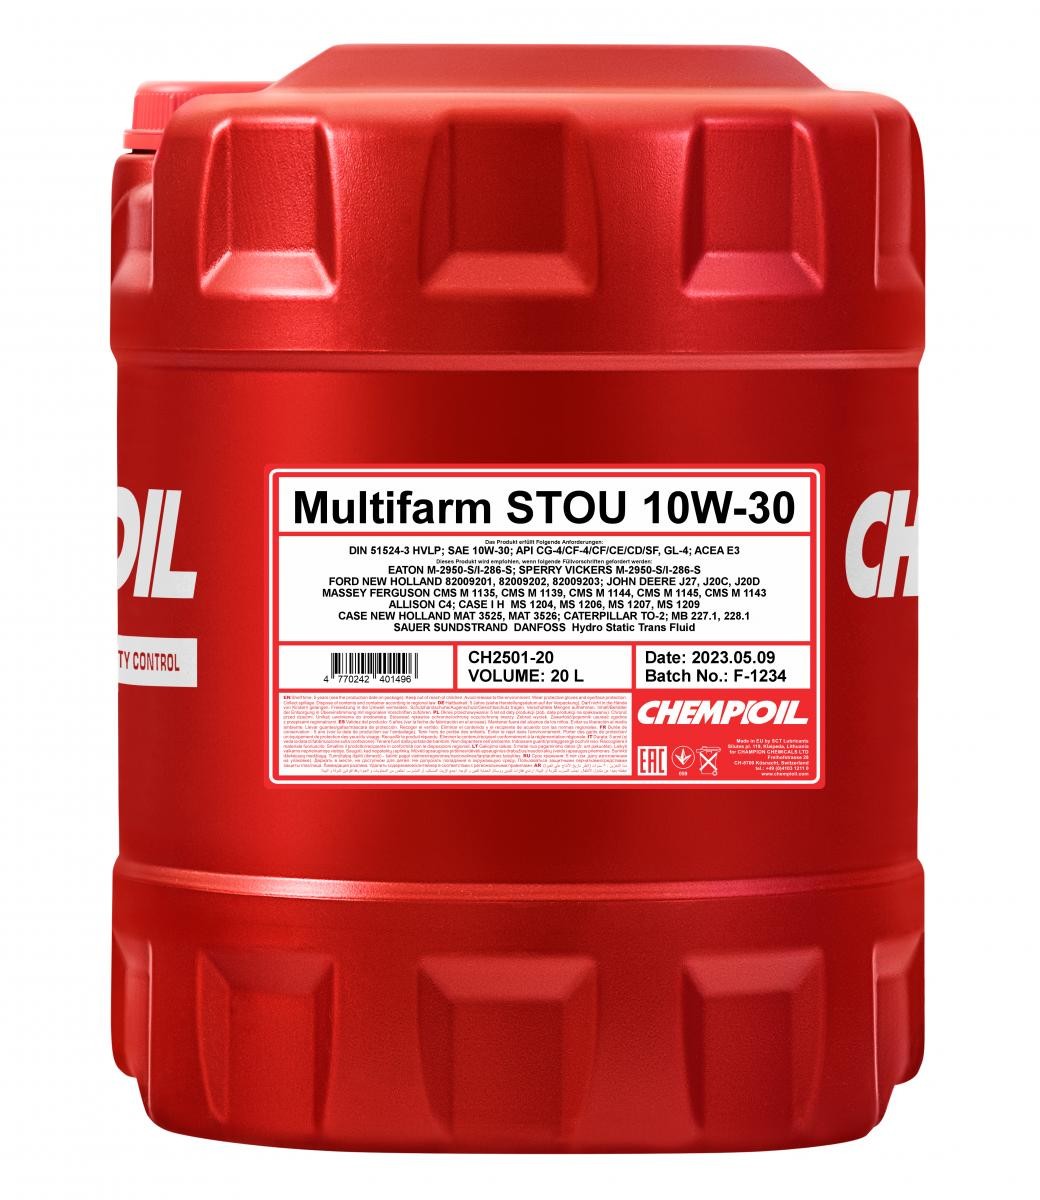 CH2501-20 CHEMPIOIL Multifarm, STOU 10W-30, 20l Motoröl CH2501-20 günstig kaufen